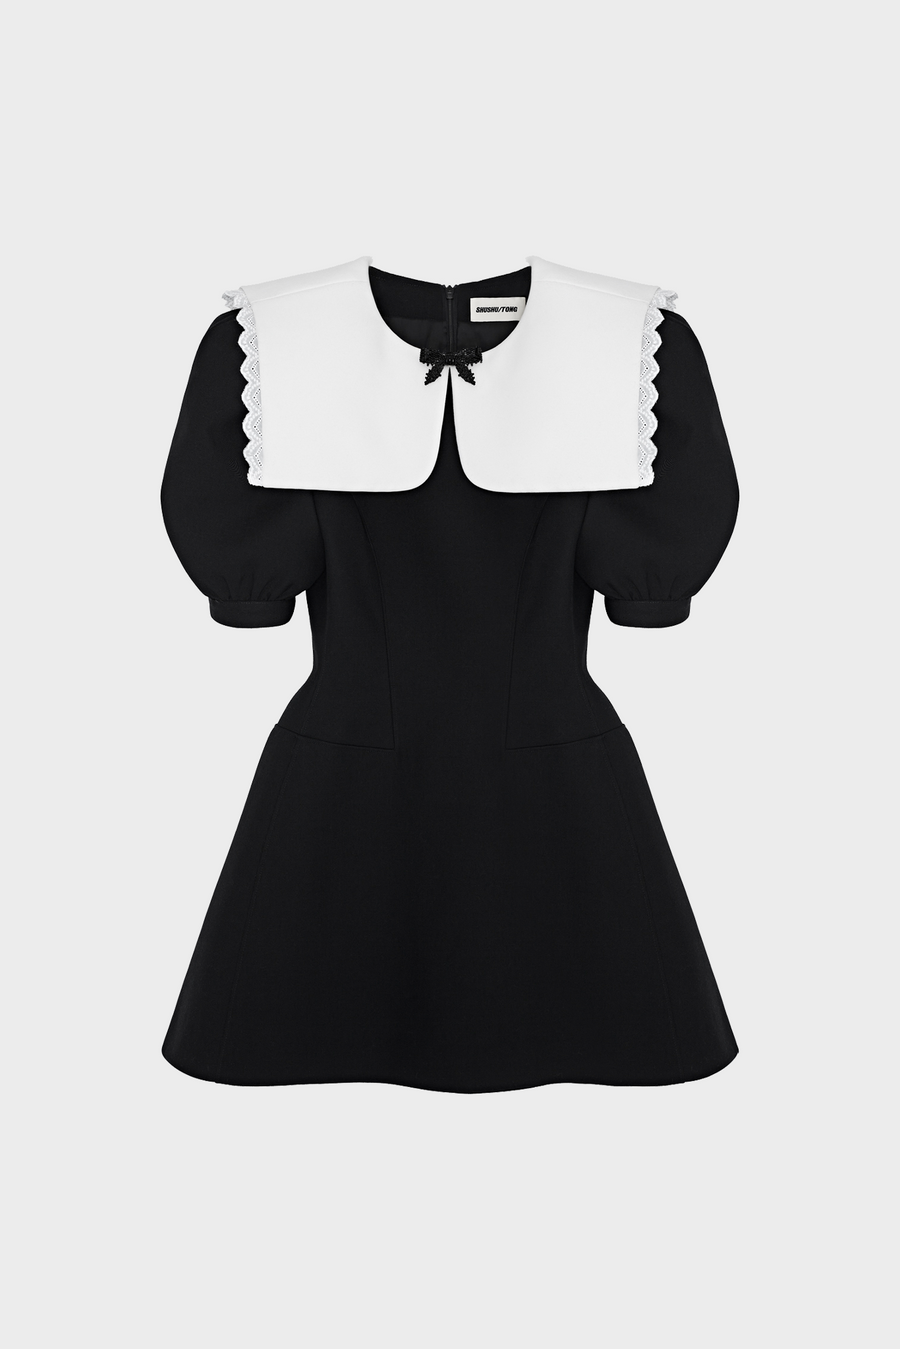 Shushu Tong - Oversized Collar Dress